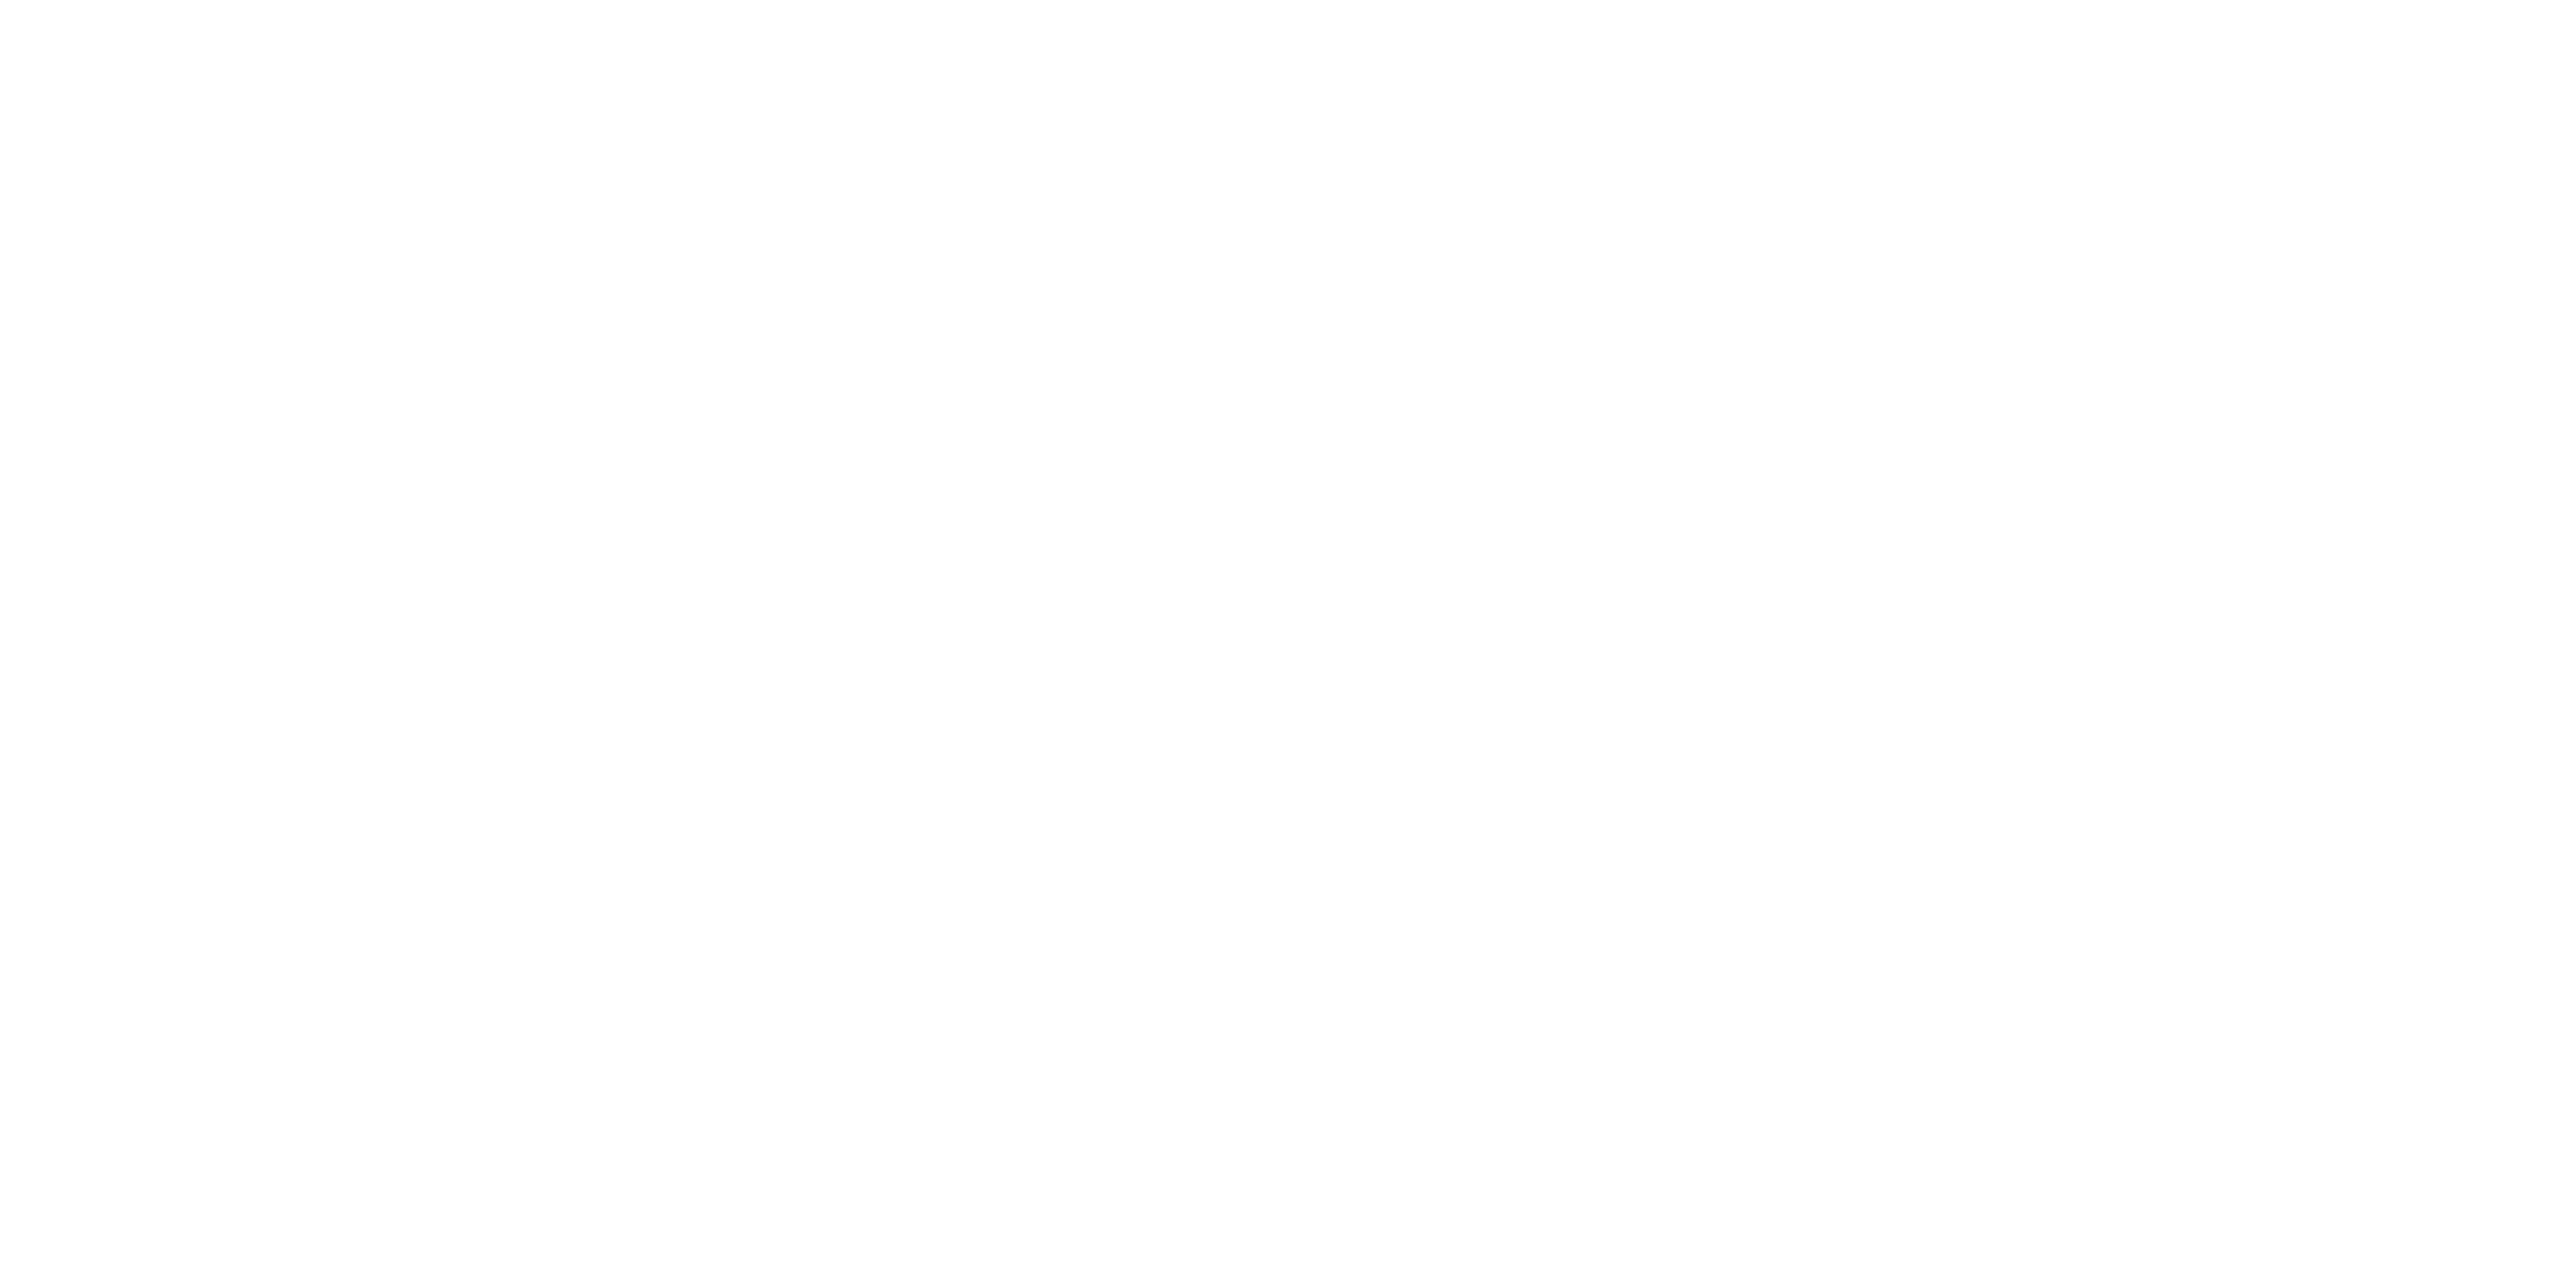 text reads tenants responsibilities